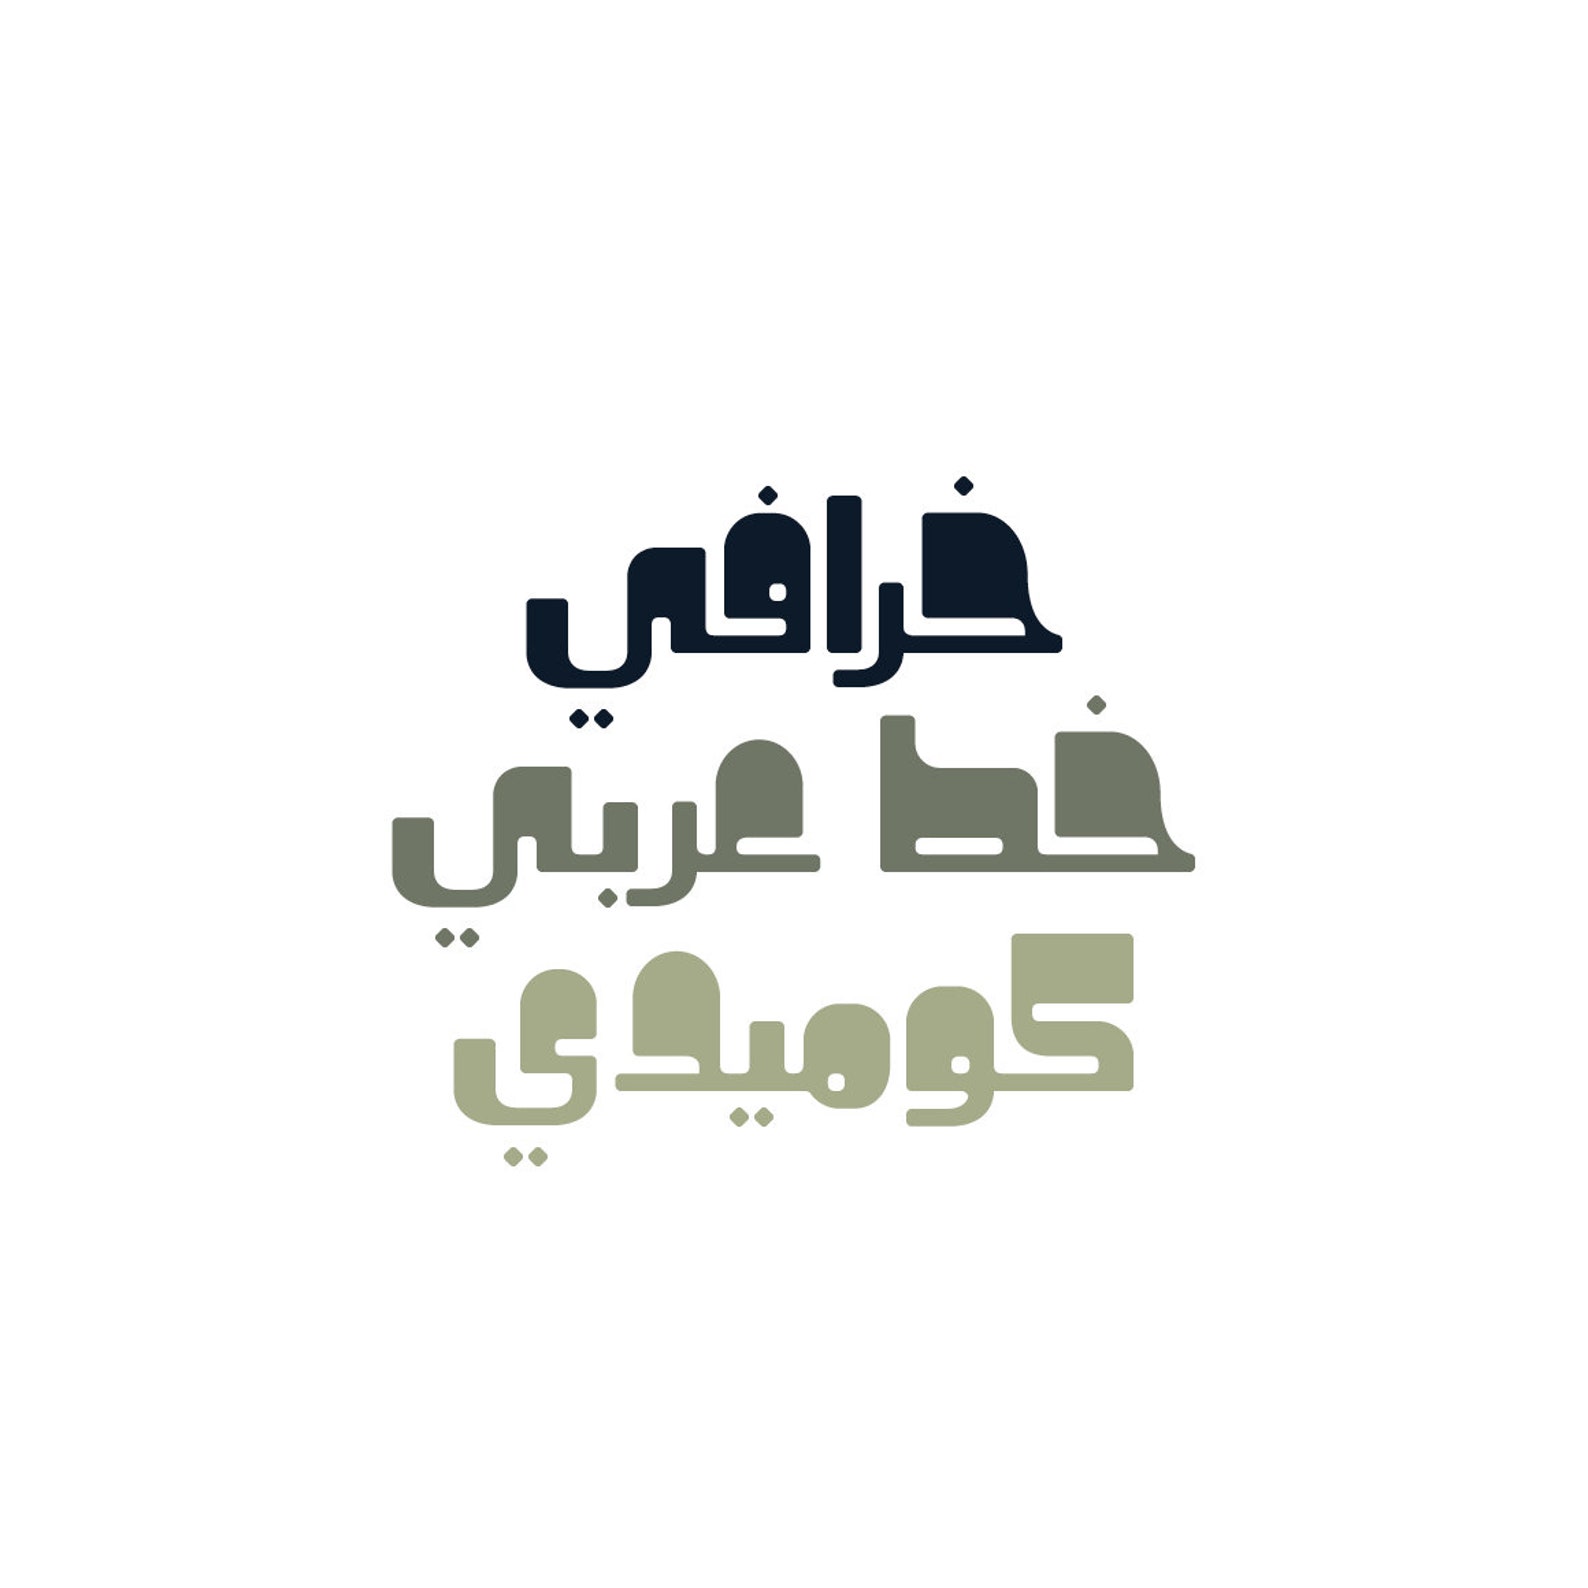 Khorafi Arabic Font arabic Typography, Arabic Calligraphy, Islamic ...